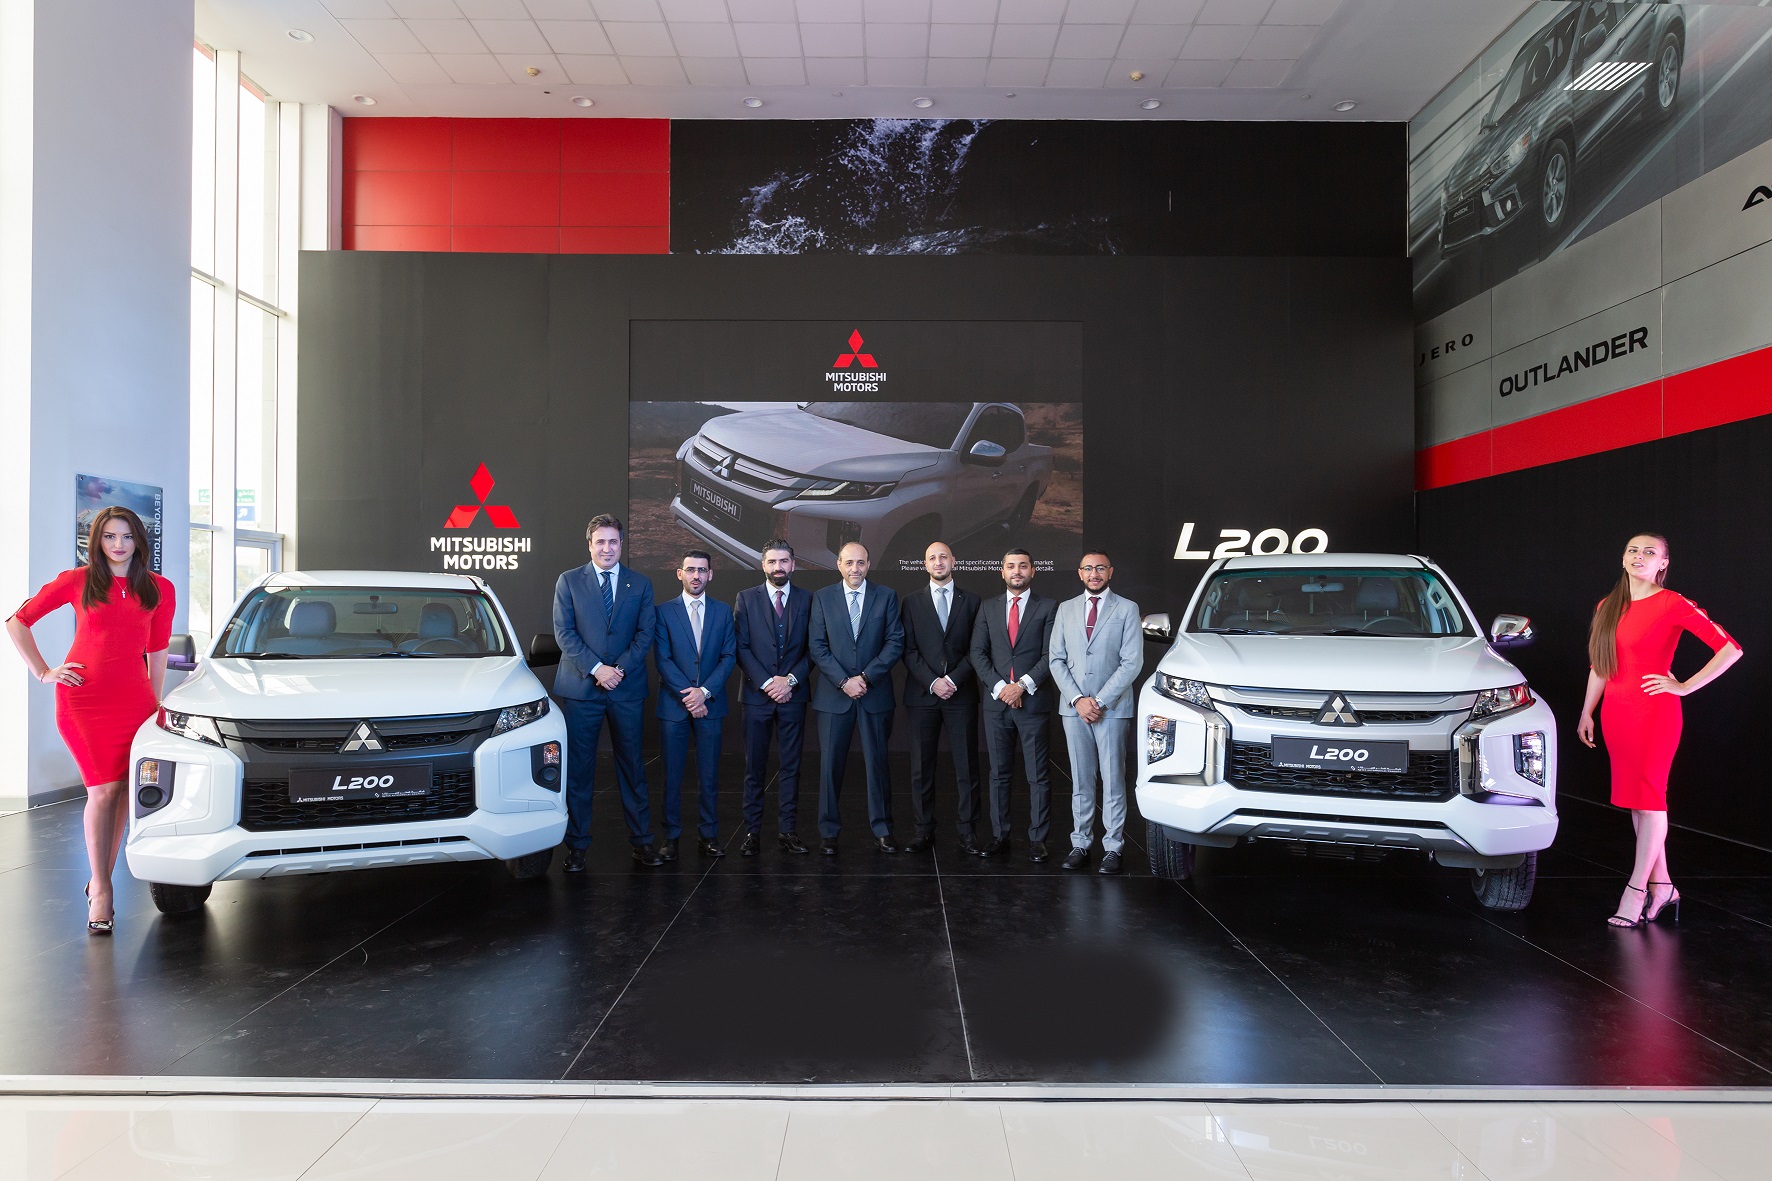 Qatar Automobiles Company launches the new Mitsubishi L200 pickup truck in Qatar